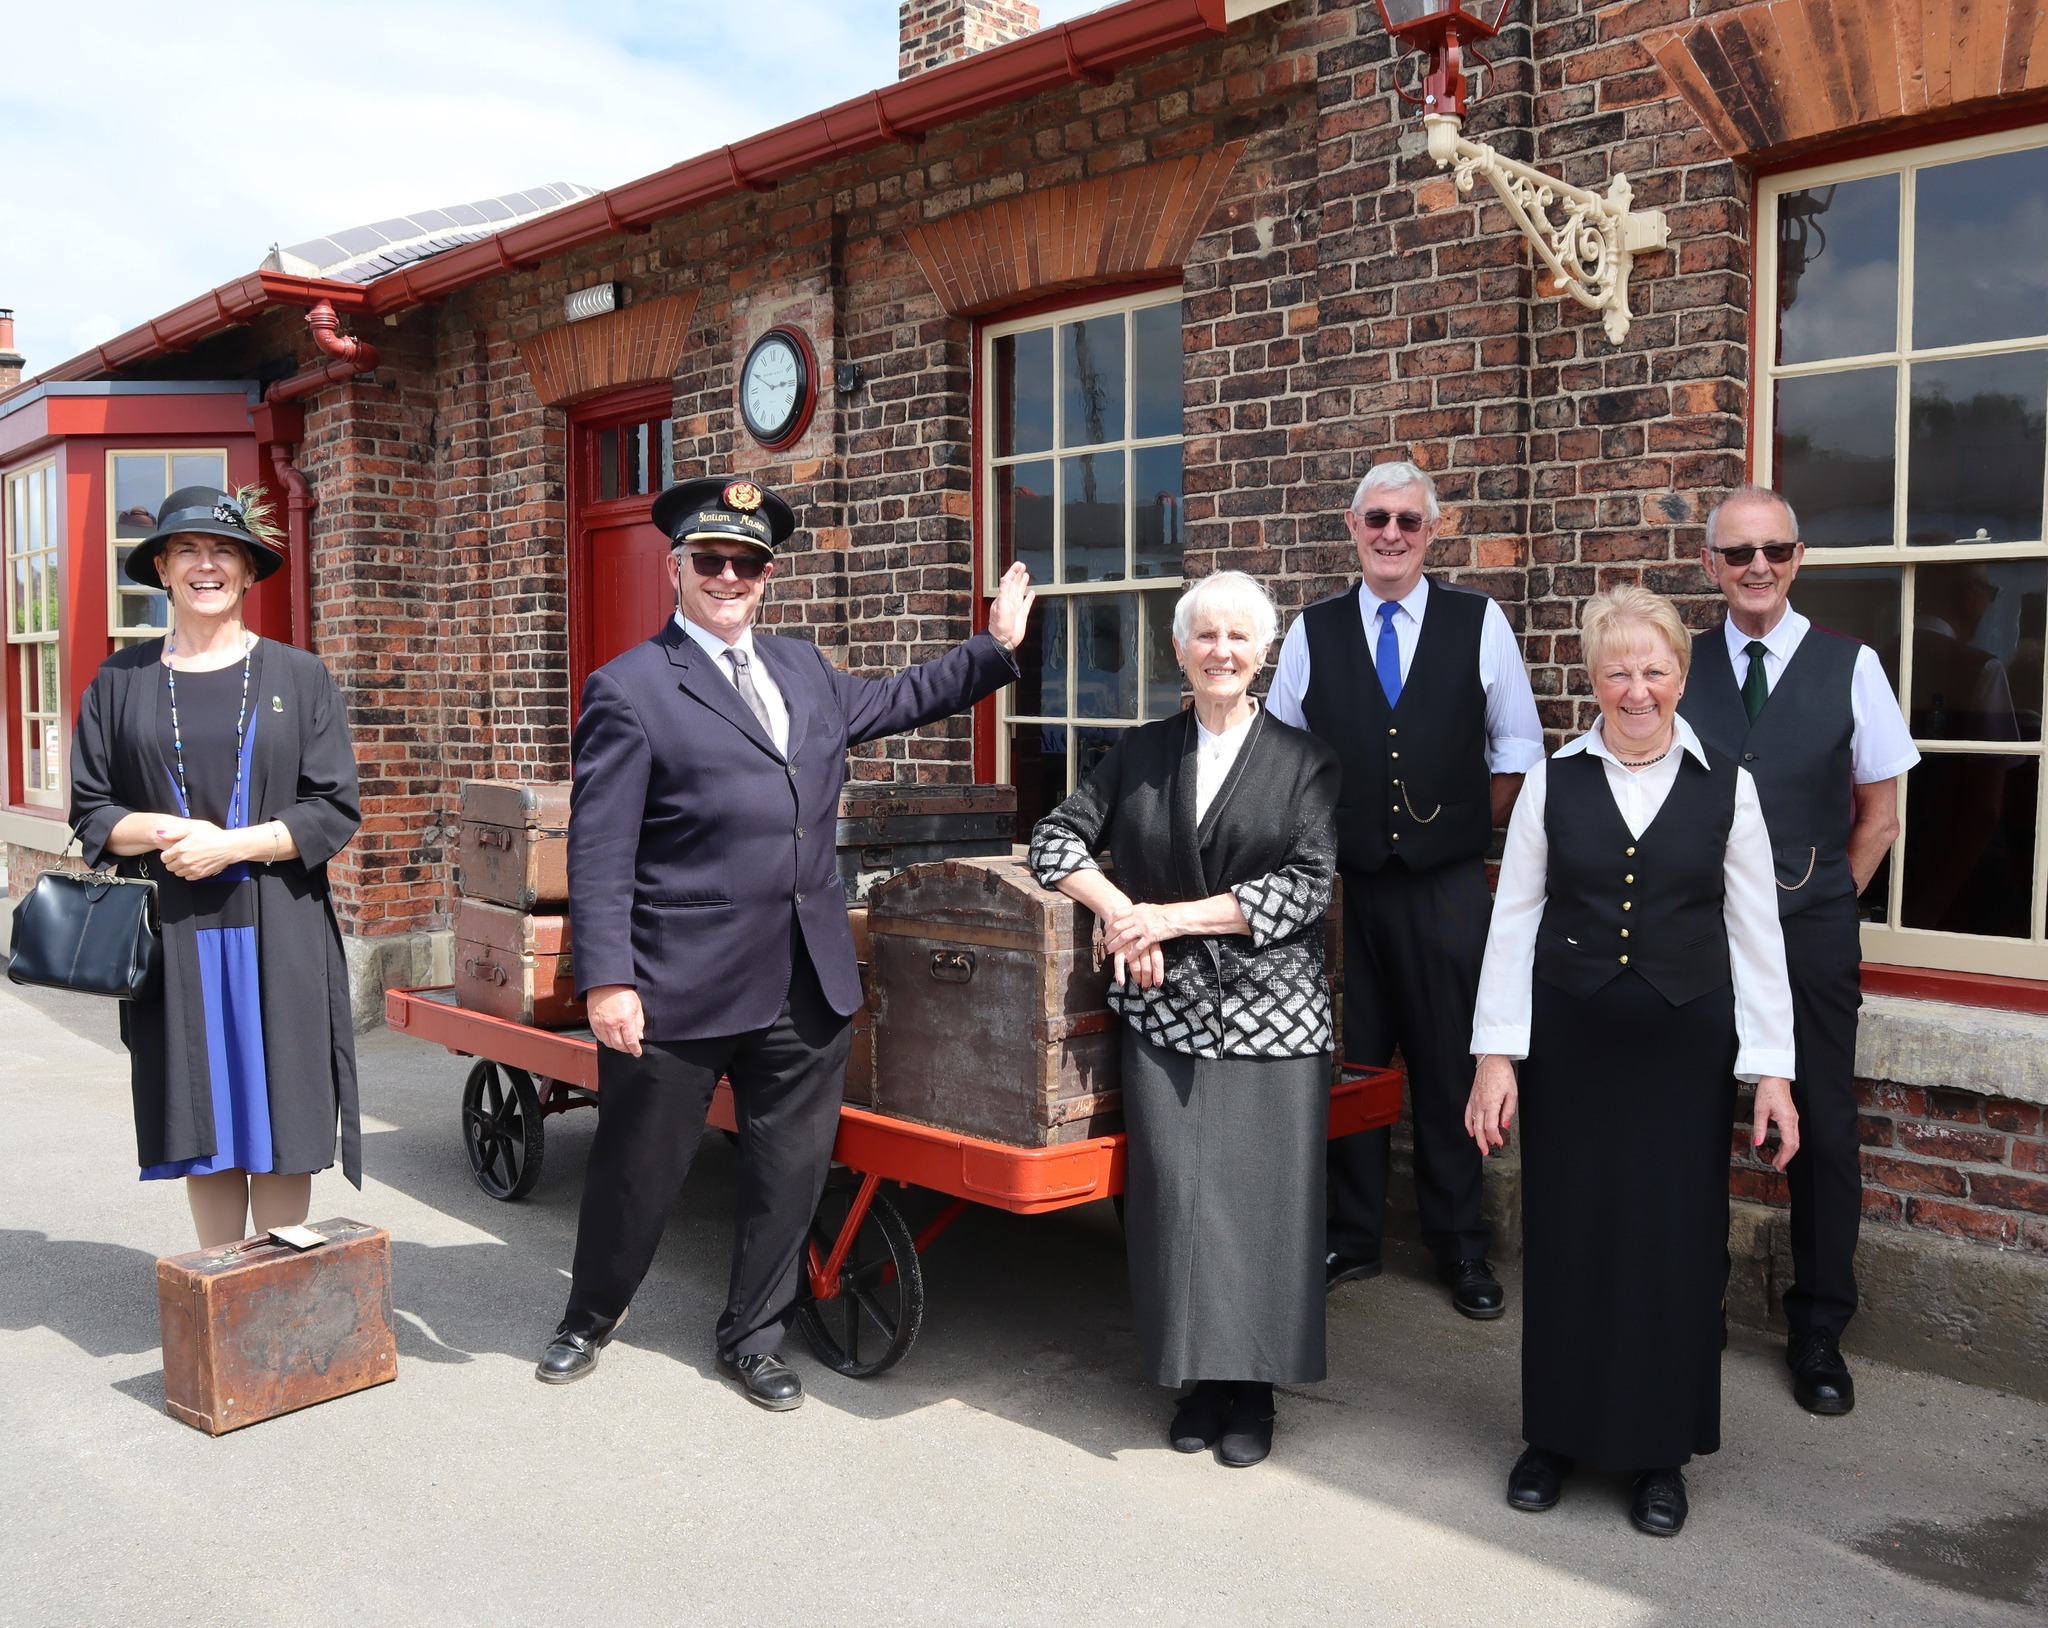 Leeming Bar history exhibition to be held at the Wensleydale Railway